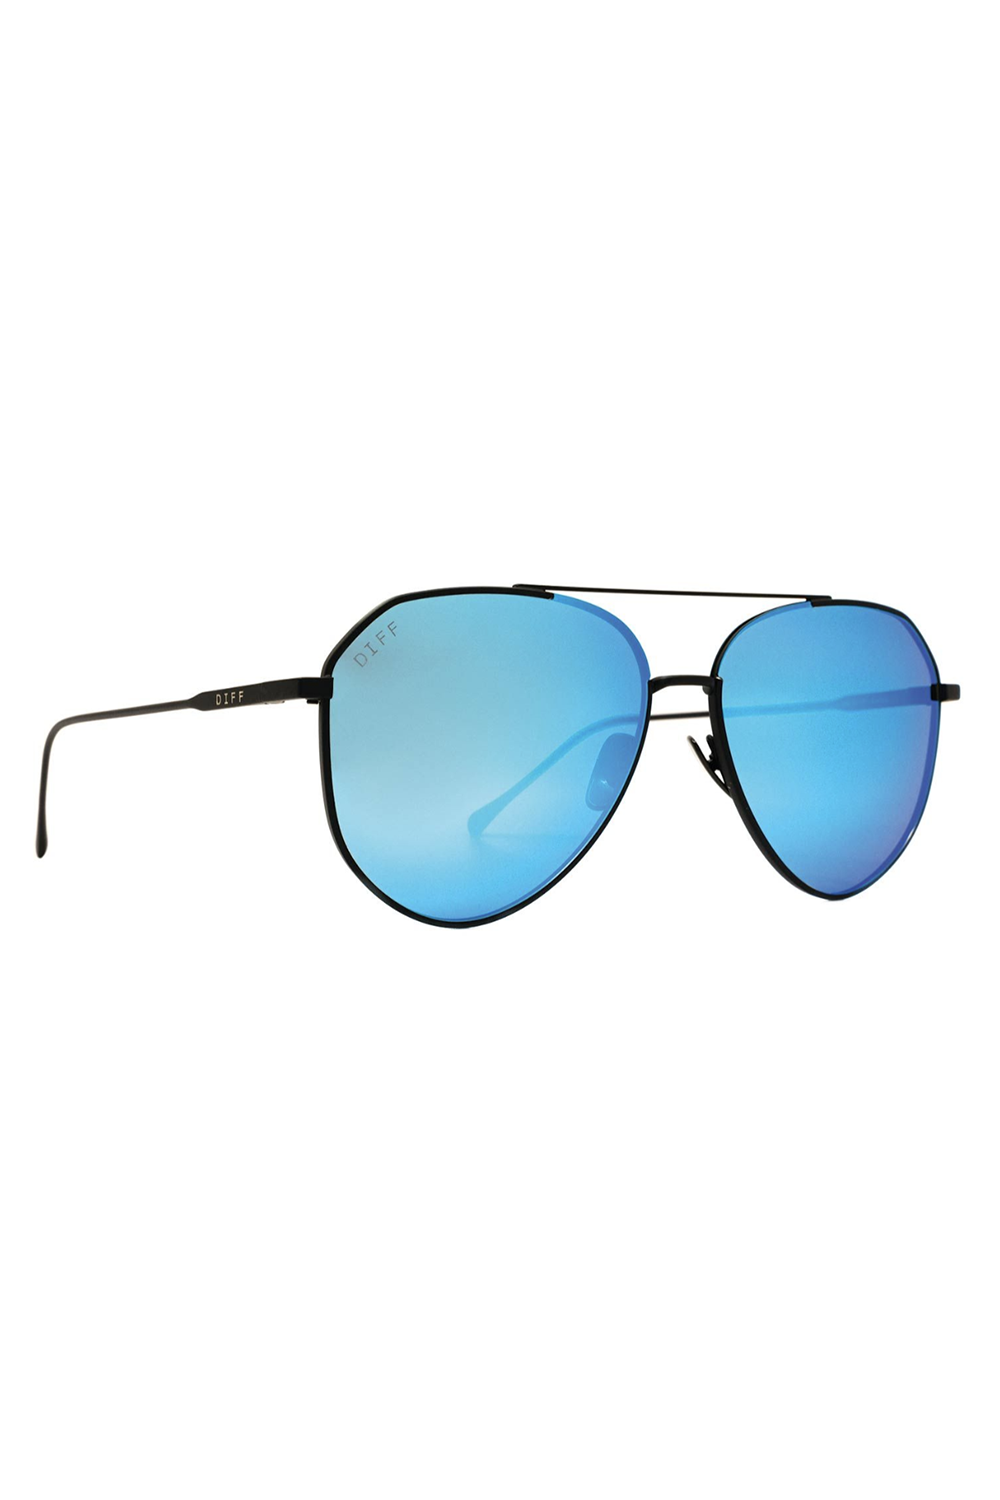 Dash Sunglasses - Matte Black Blue